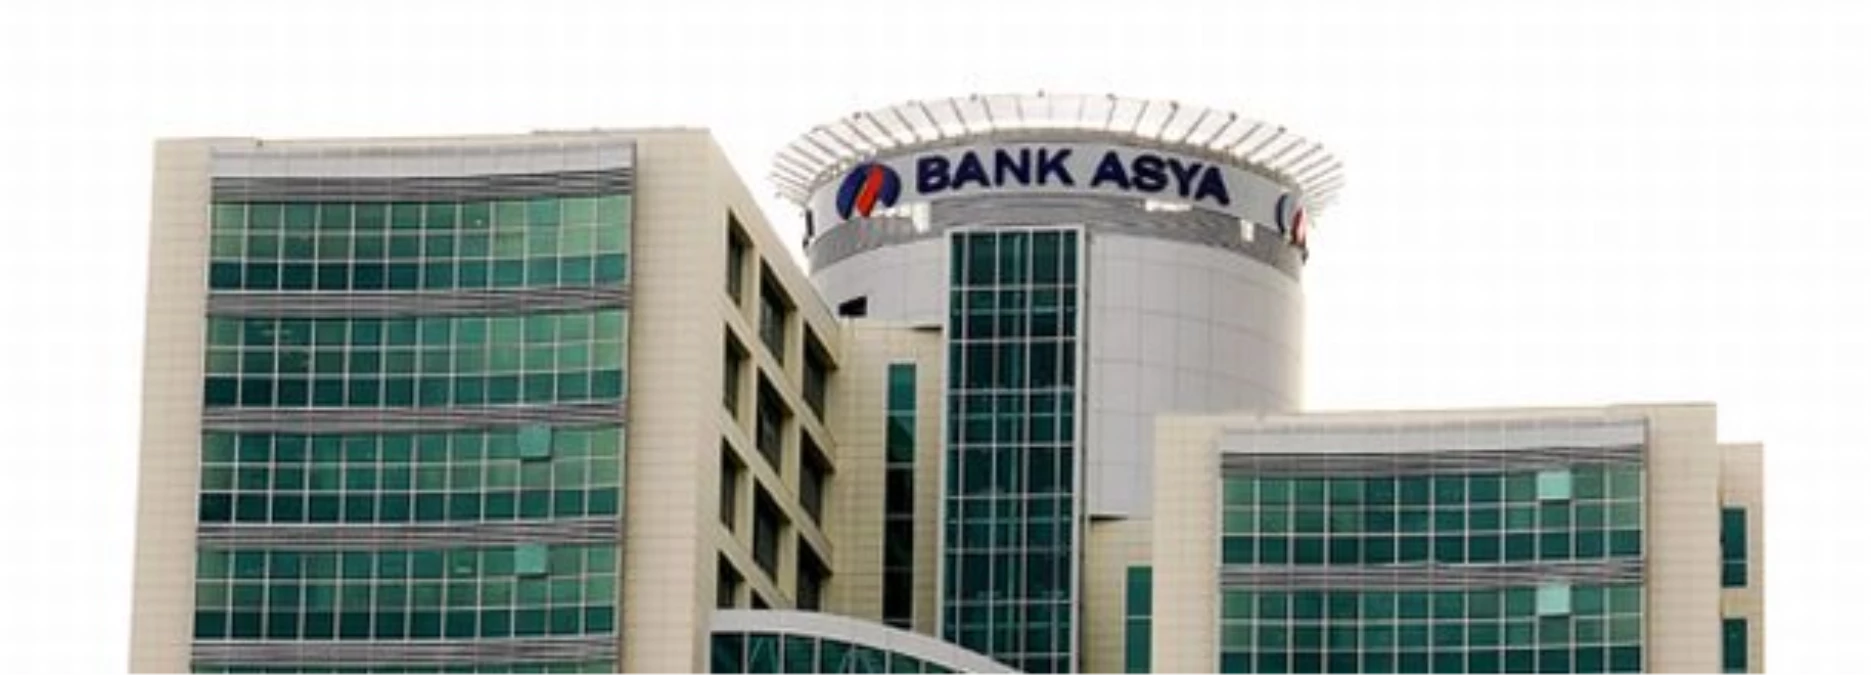 Bank Asya Gözaltı Pazarına Alındı